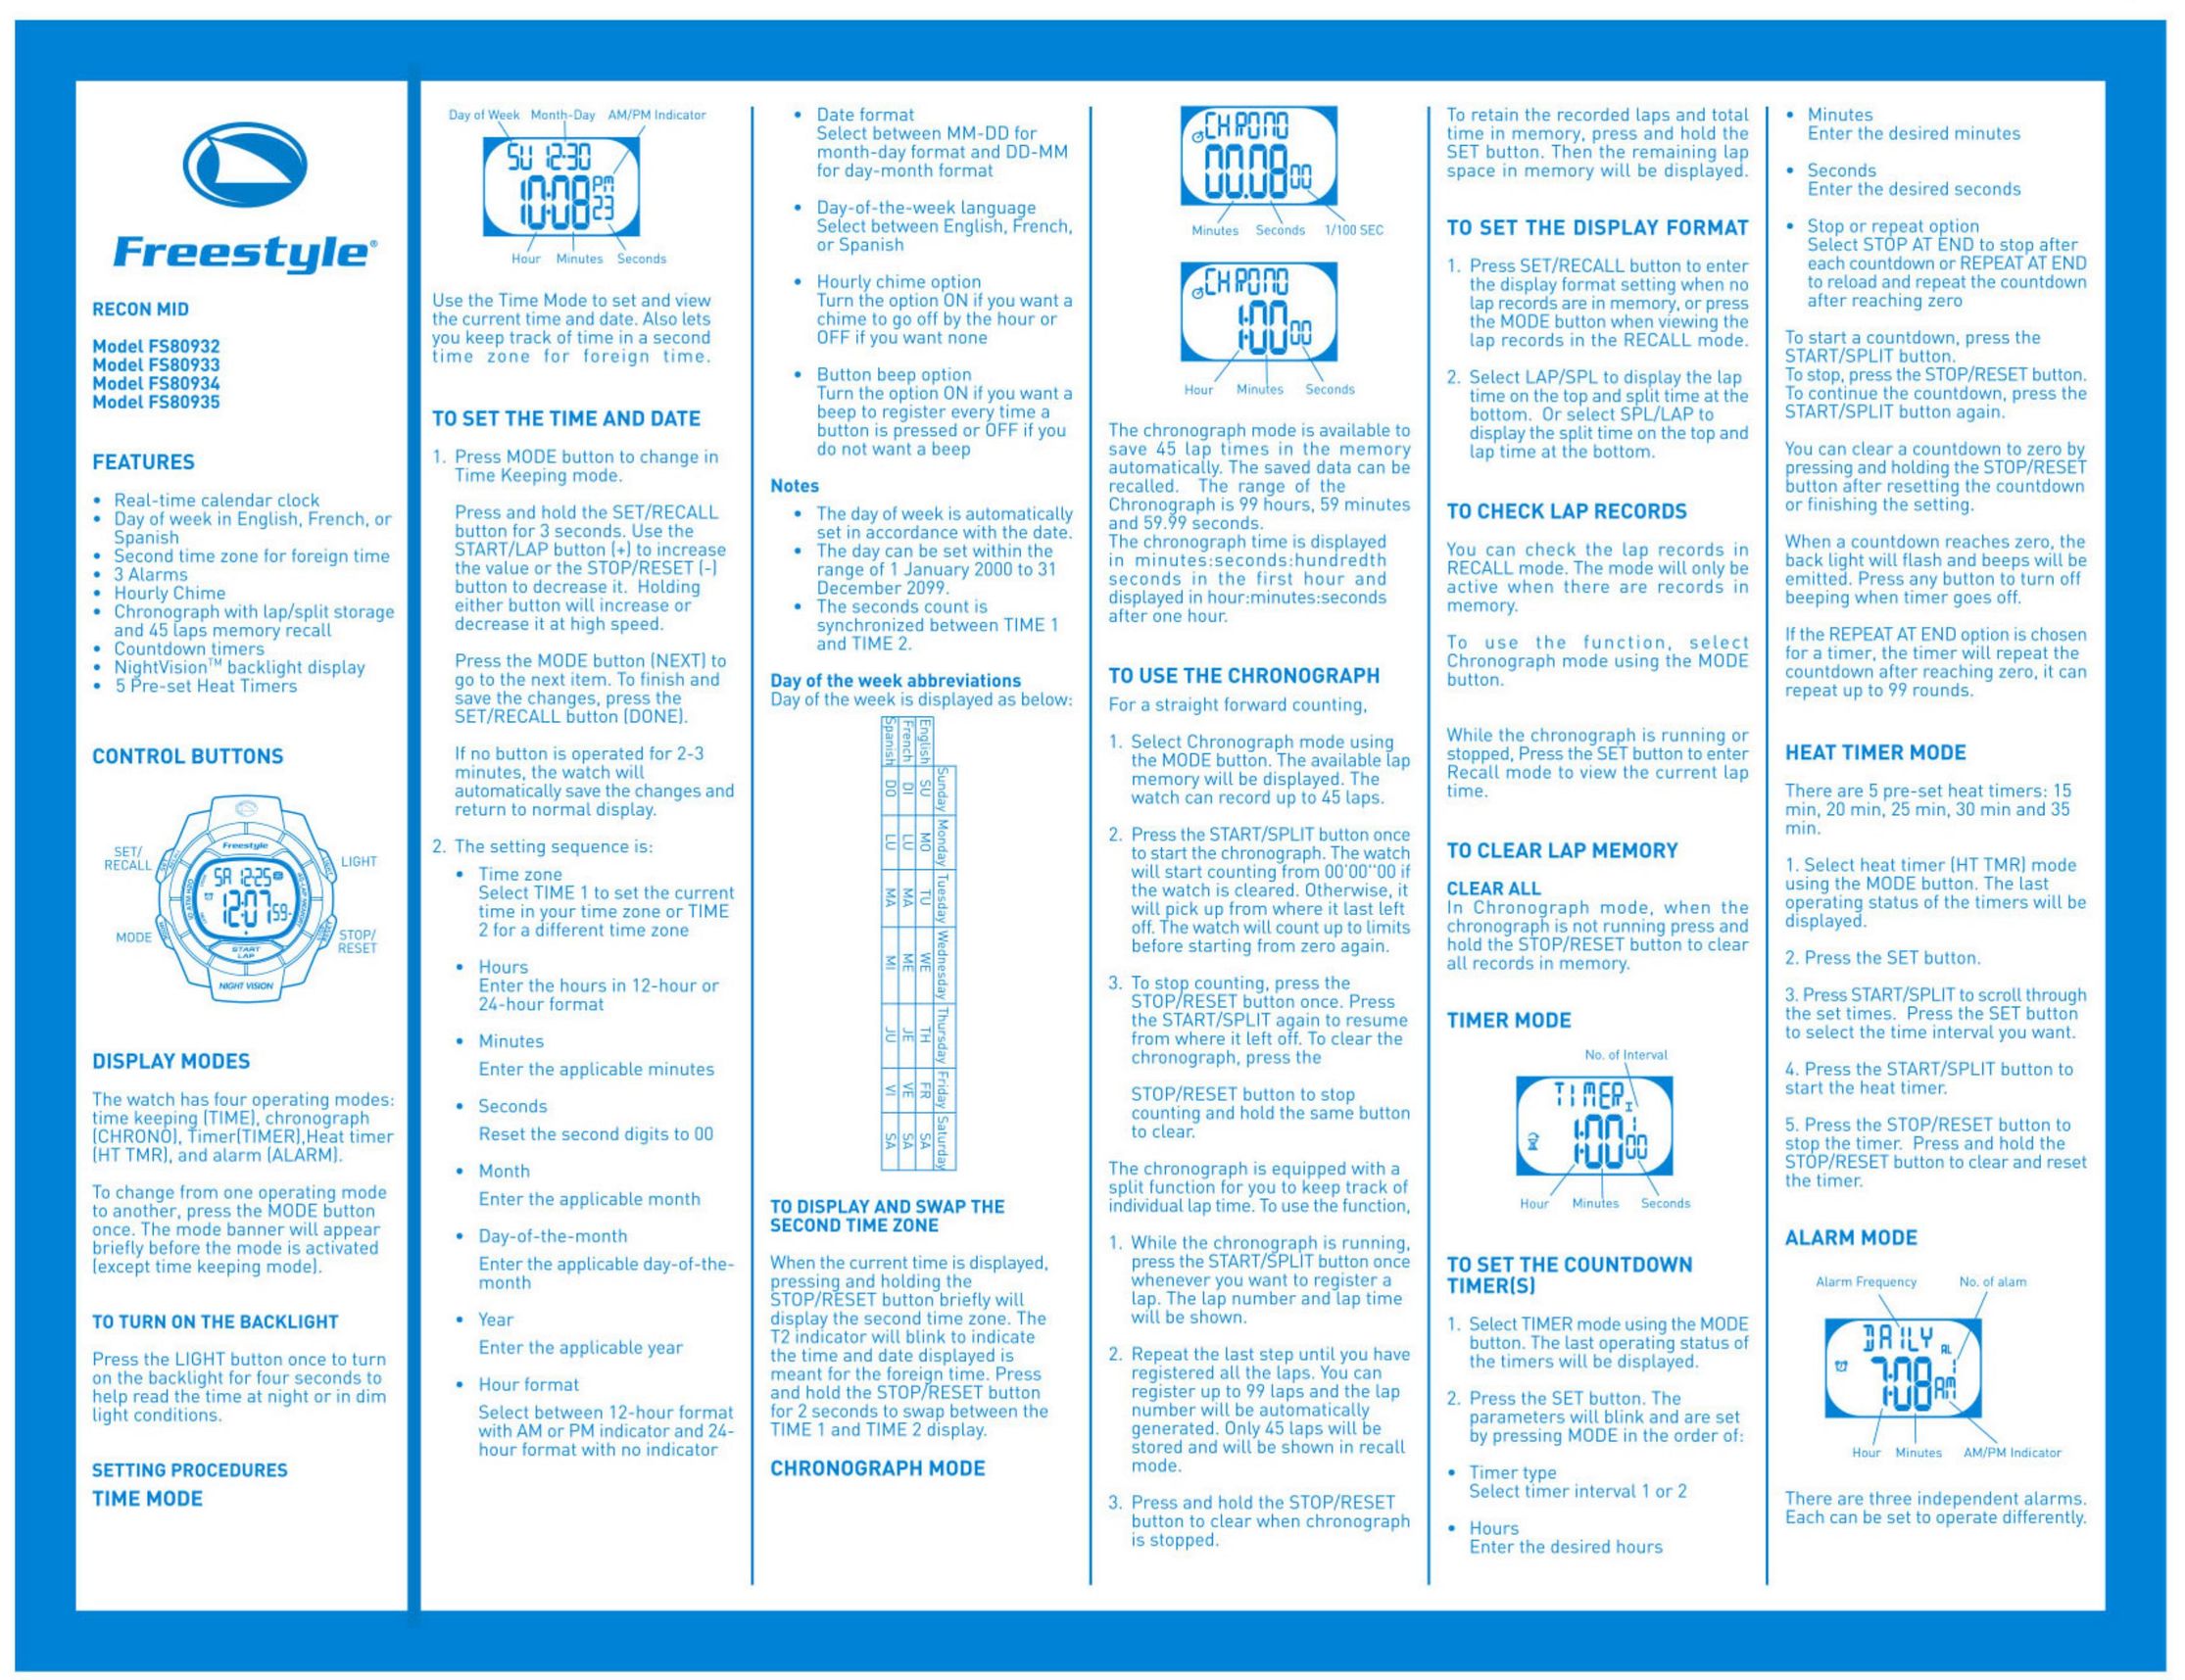 Freestyle FS80933 Clock User Manual